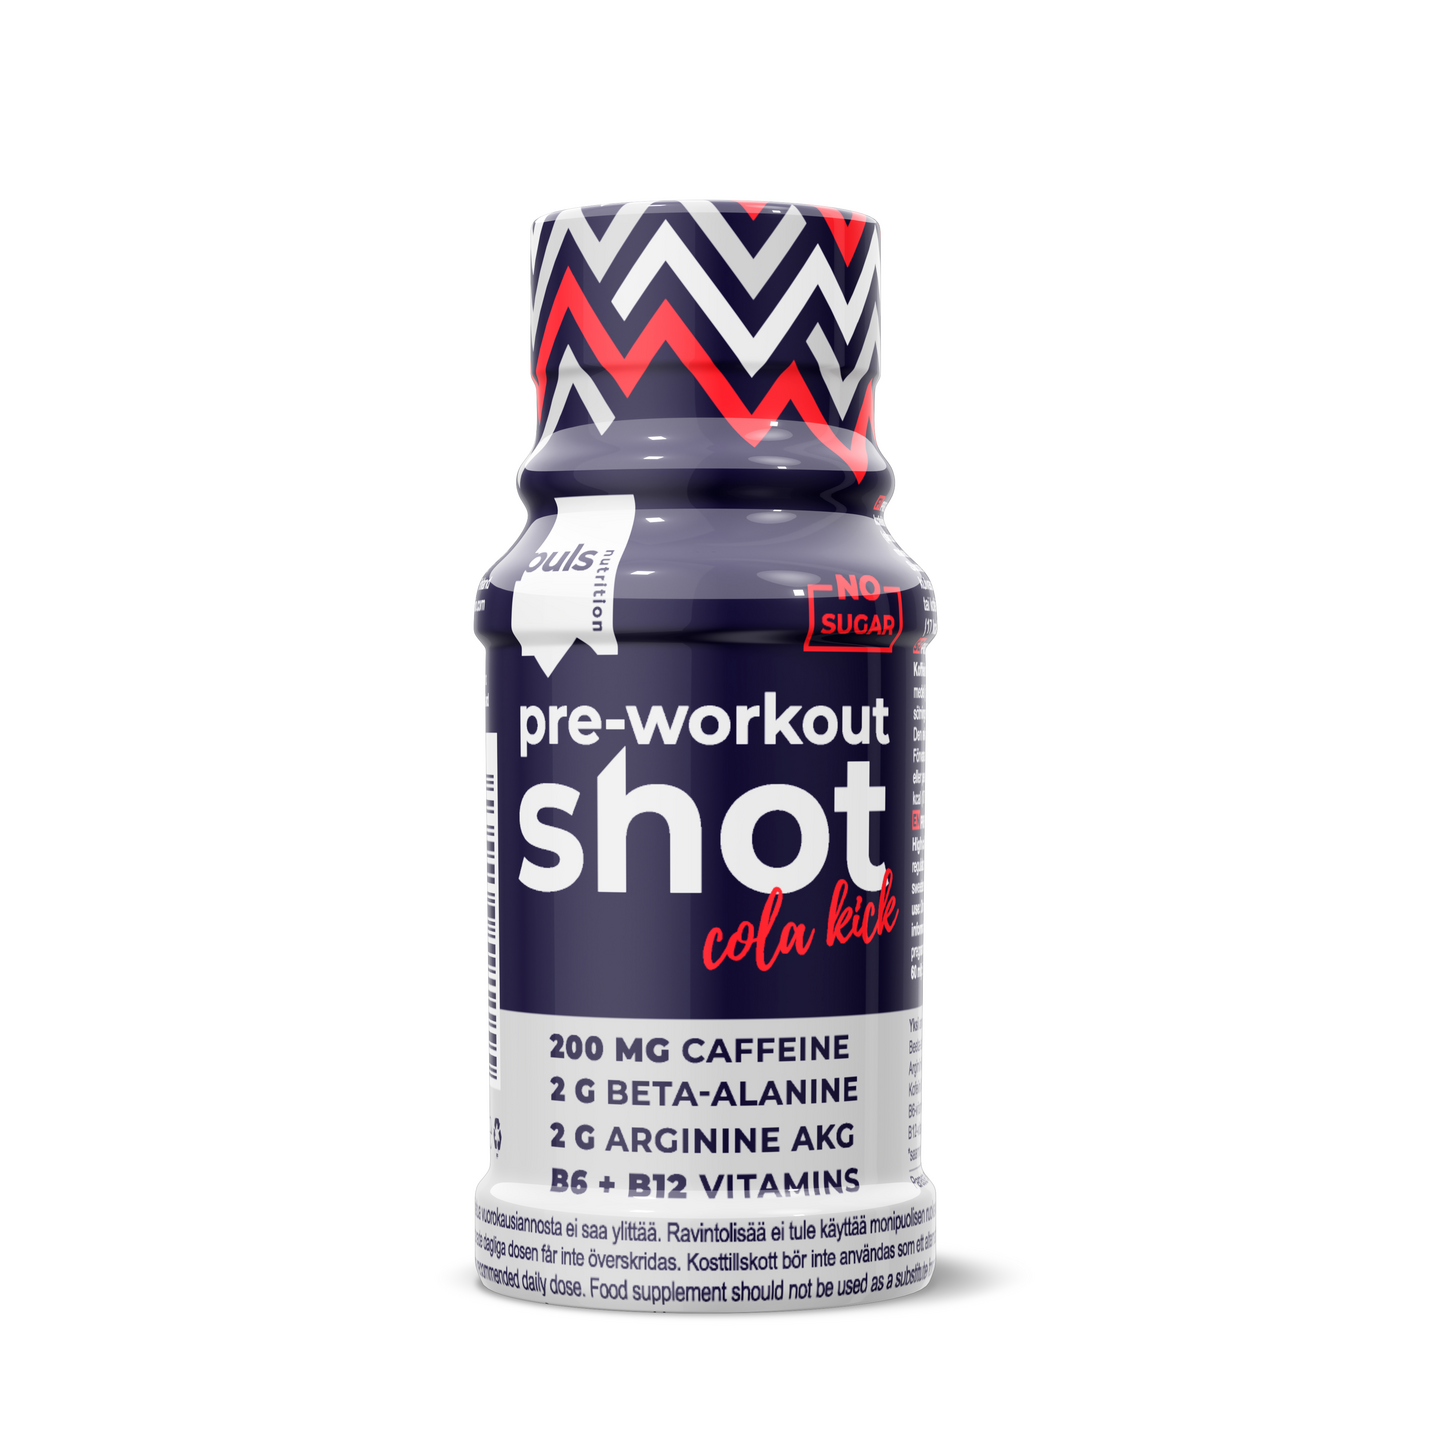 Puls shot pre-workout 60ml cola